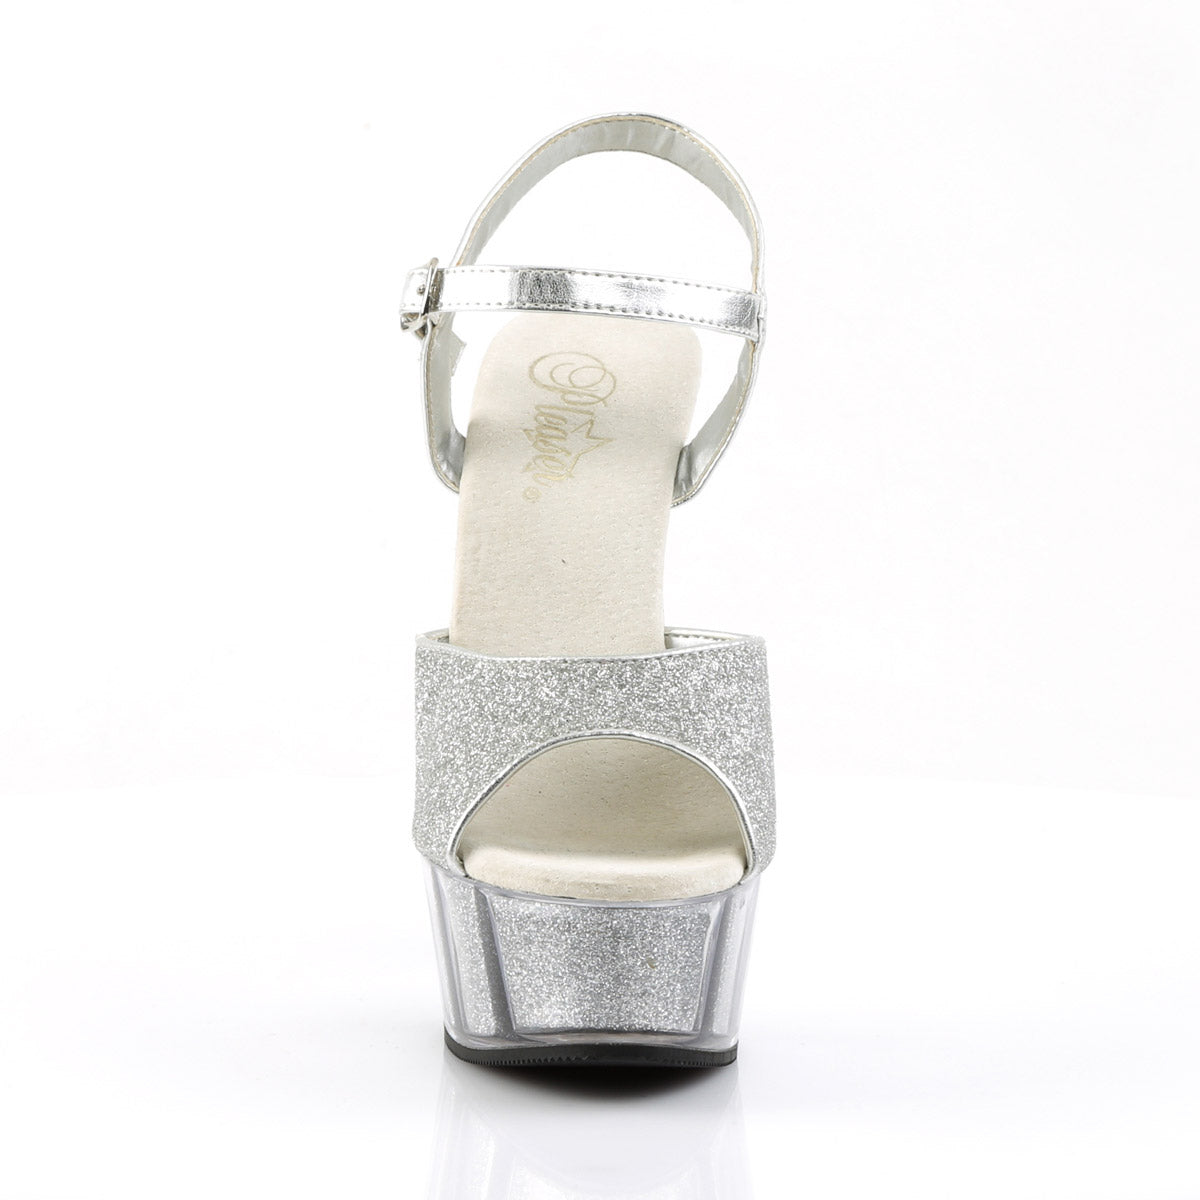 Glitter Platform Stiletto Ankle Strap Sandals High Heels Shoes Pleaser Pleaser DELIGHT/609/5G